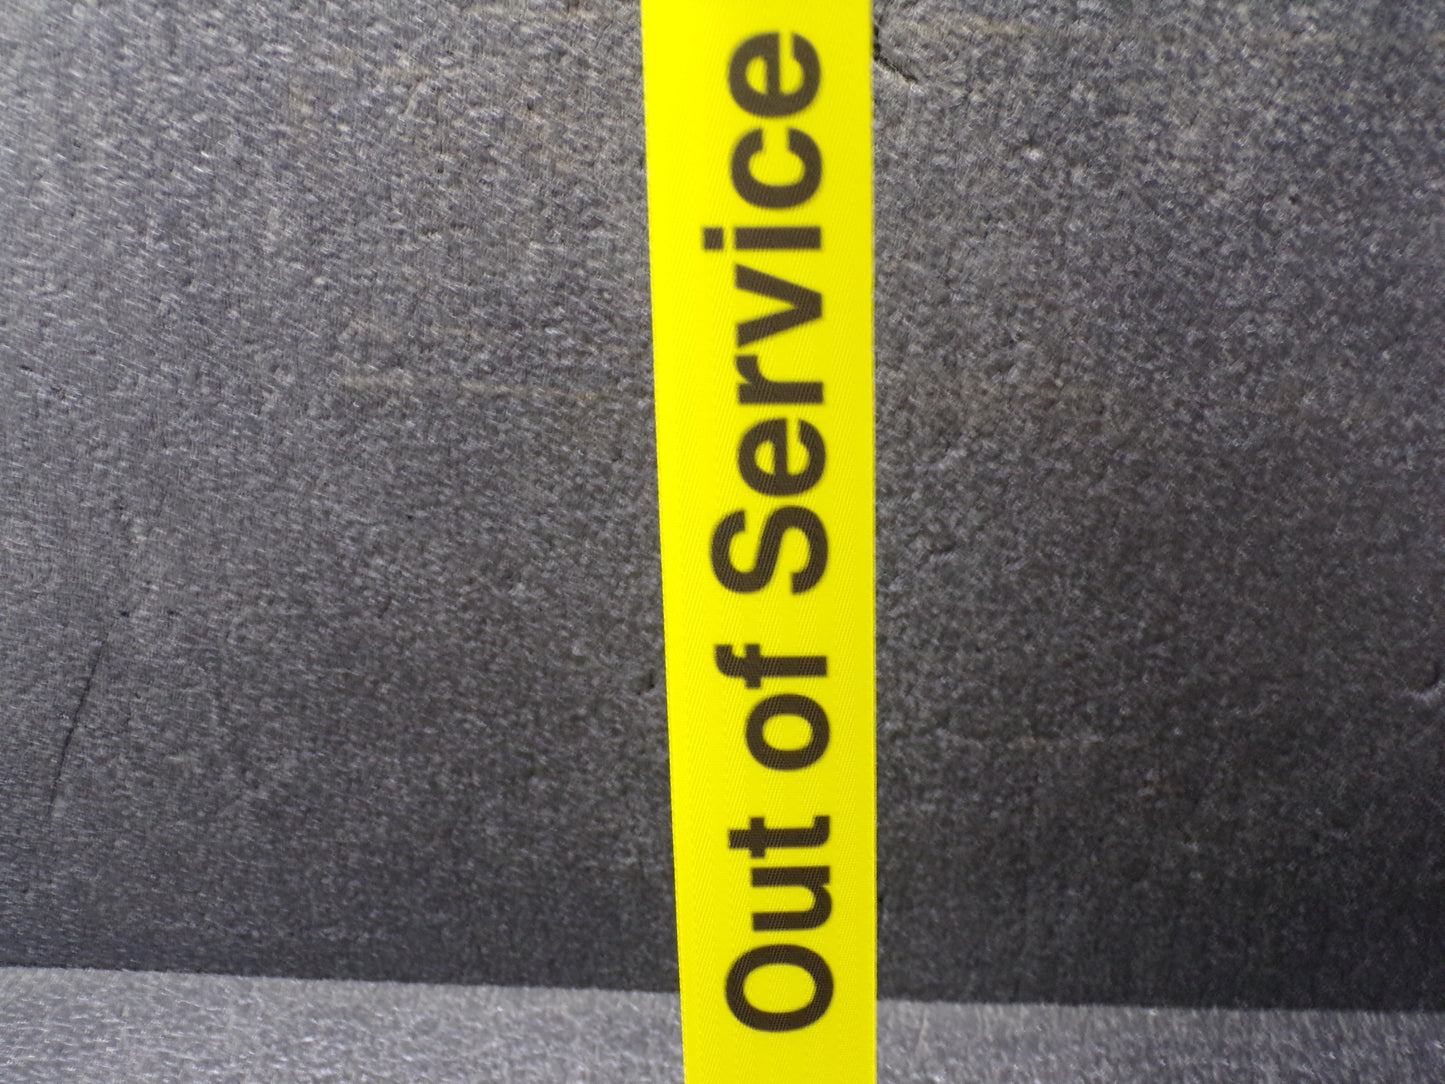 TENSABARRIER Retractable Belt Barrier, Yellow Belt With Black Writing, Out of Service (CR00075-BT23)